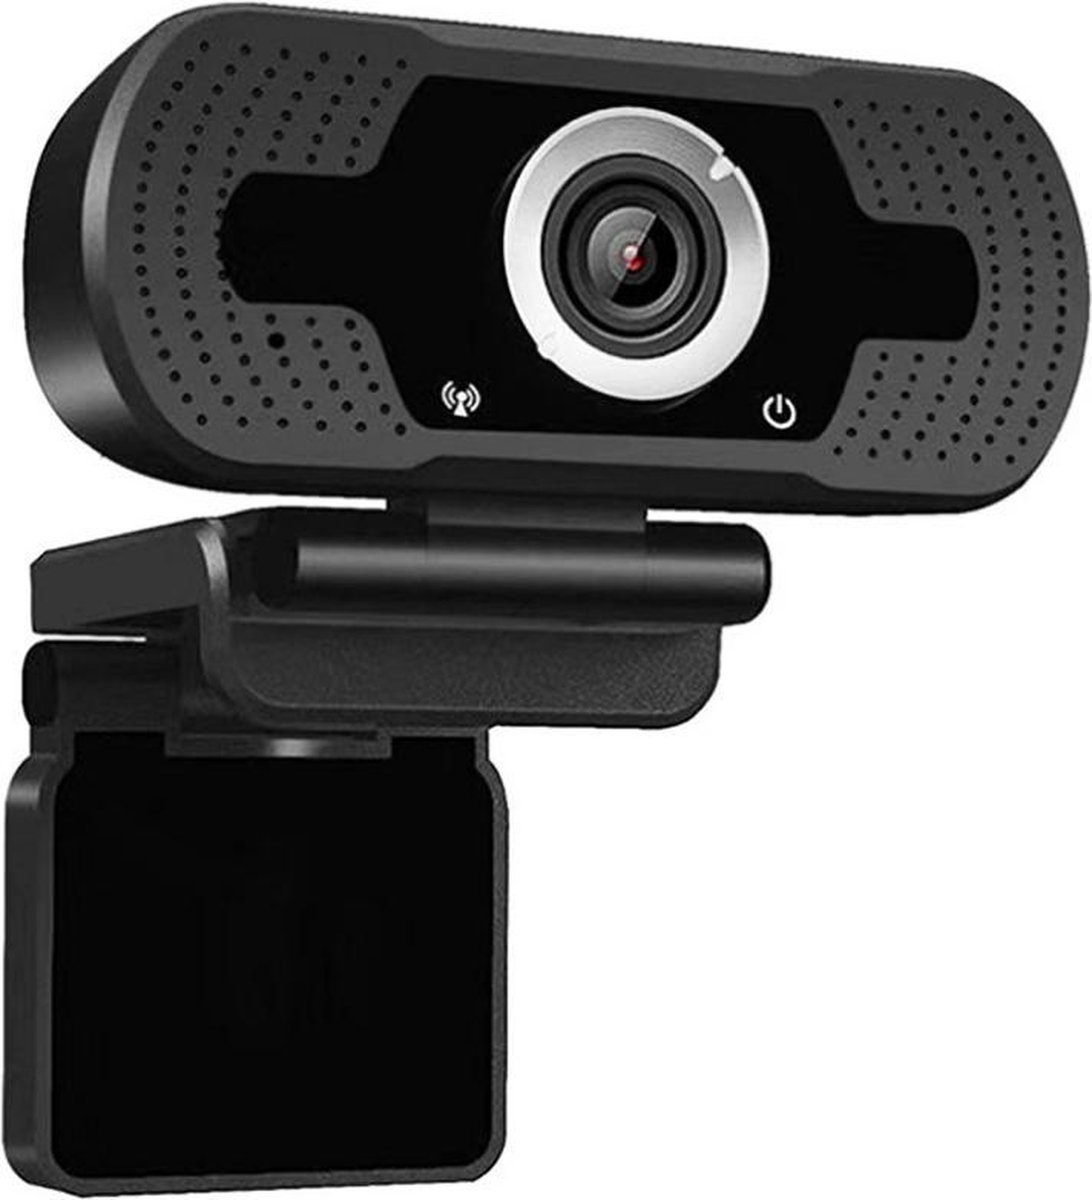 NÖRDIC EC-A258, Webcam met microfoon voor PC, laptop, Webcamera HD 1080p, zwart